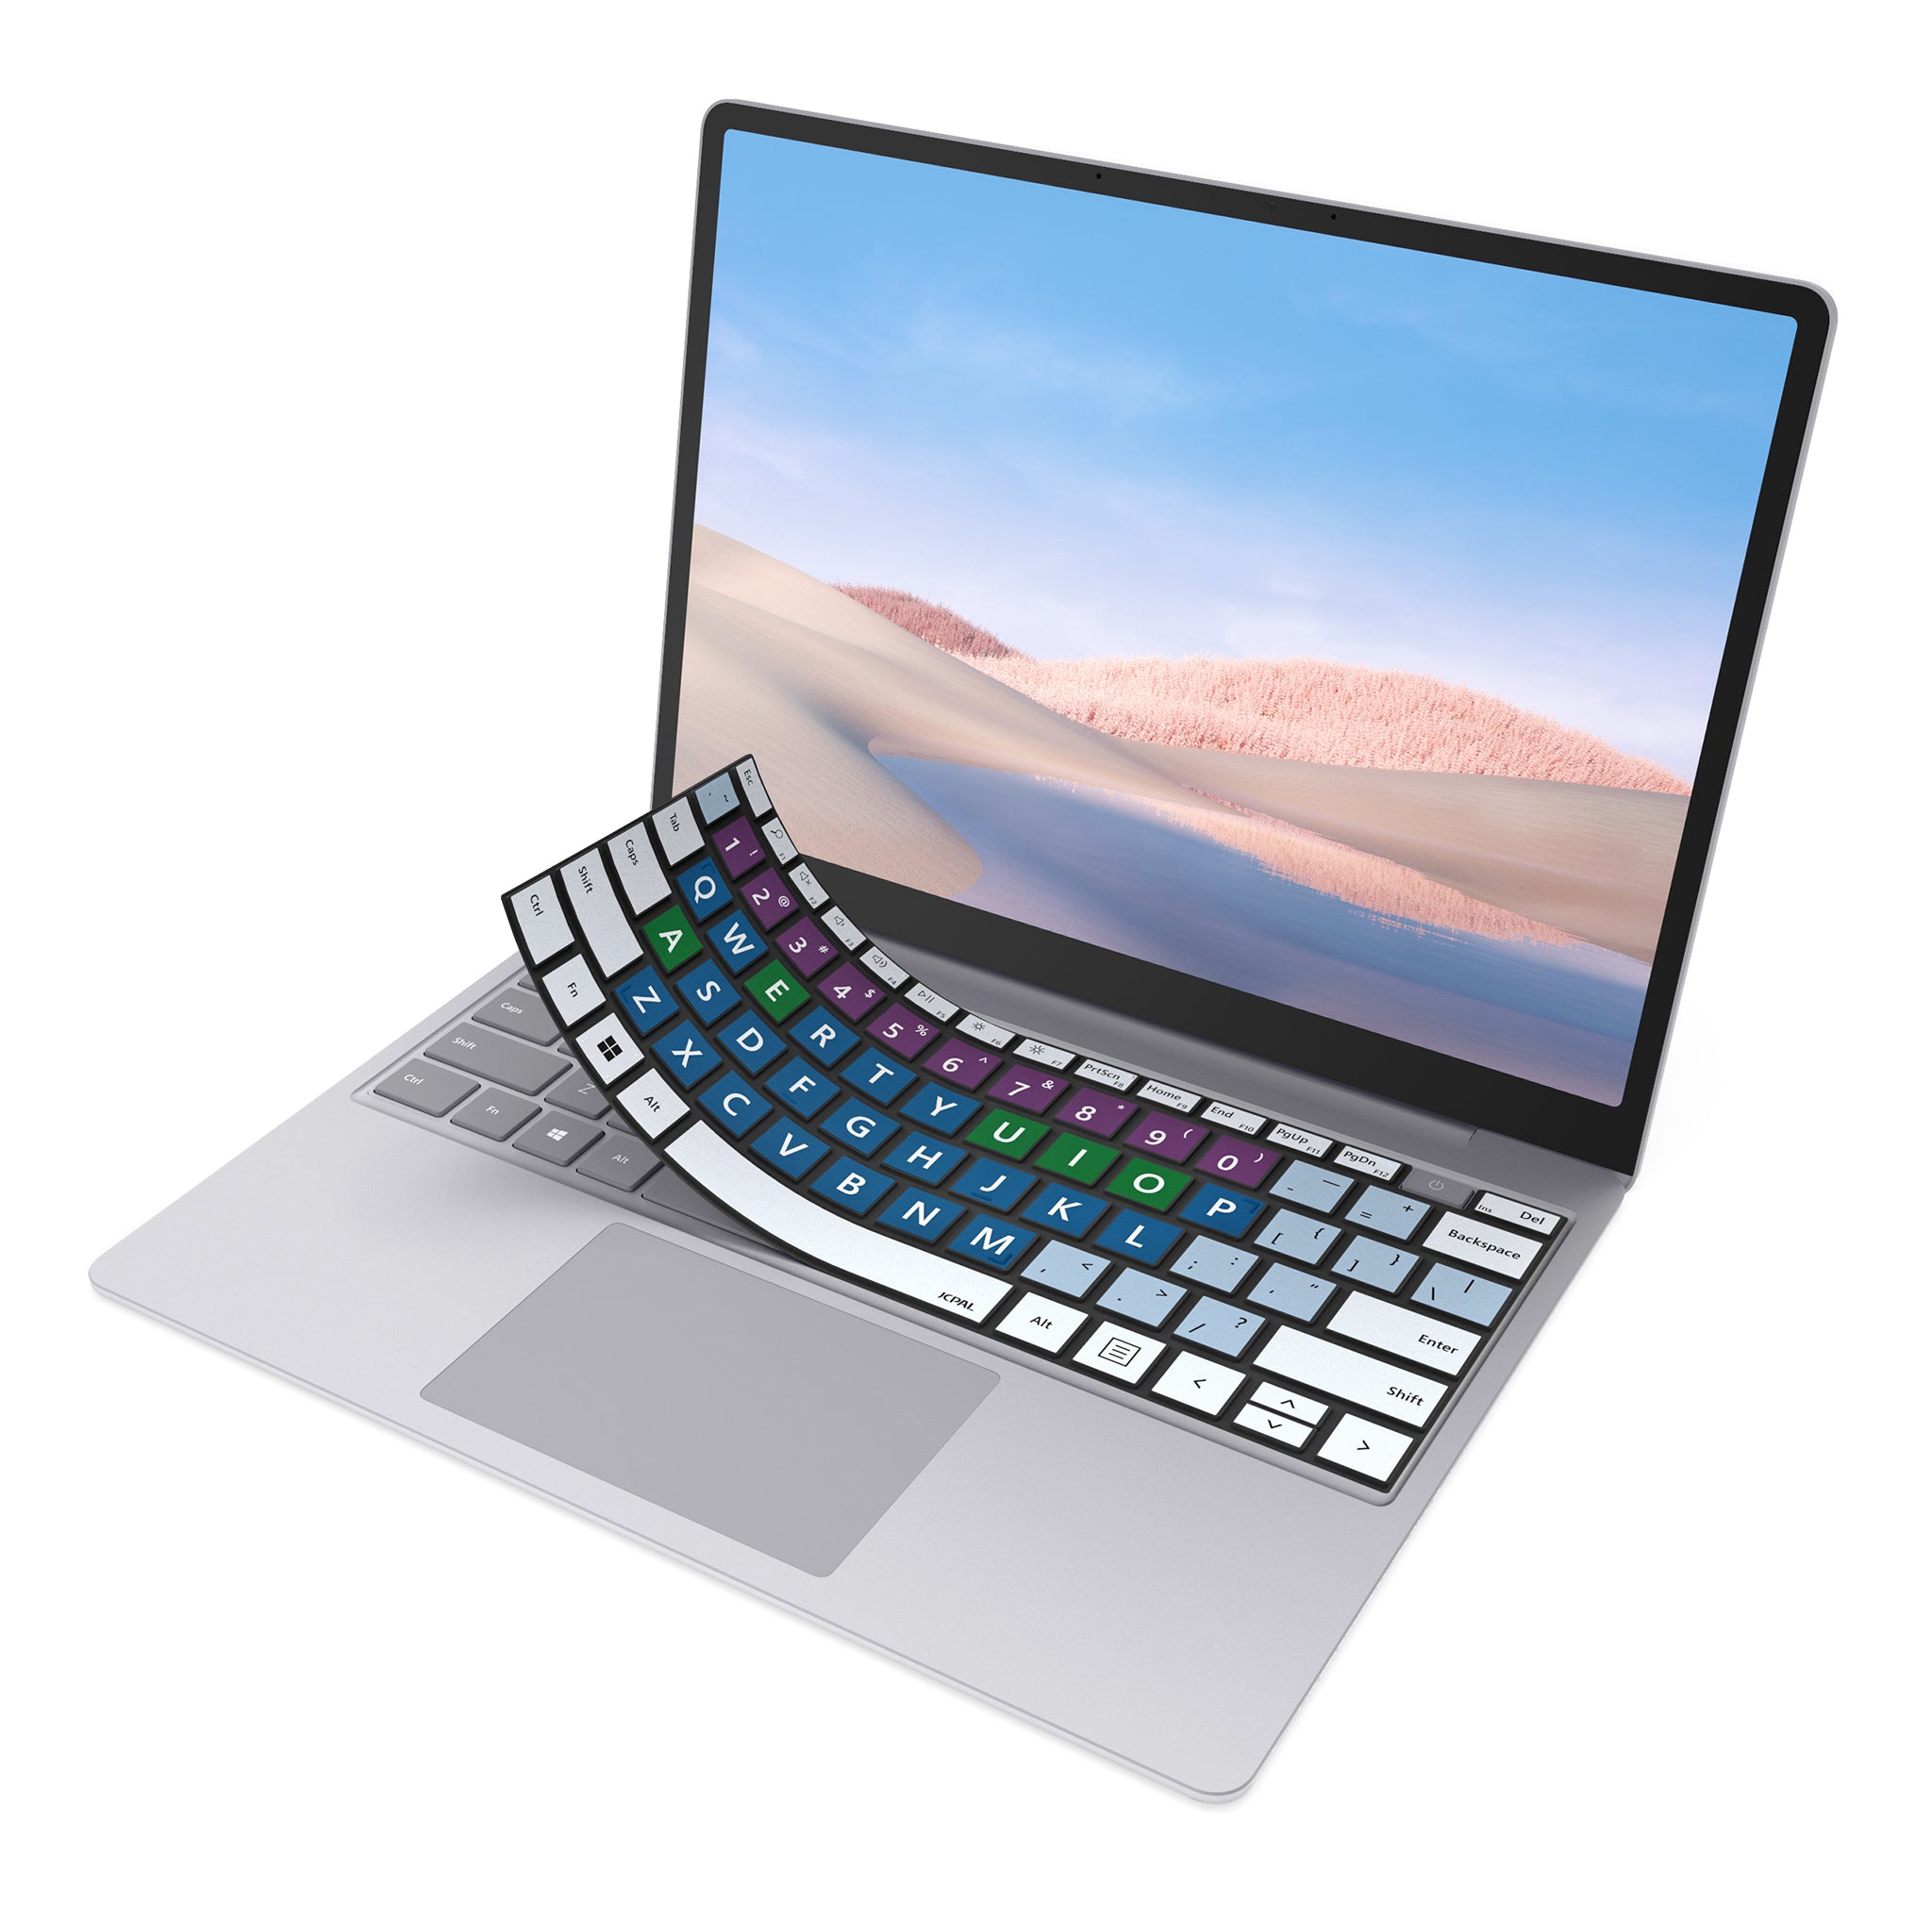 Buy Microsoft Surface Laptop 4 online in Pakistan 